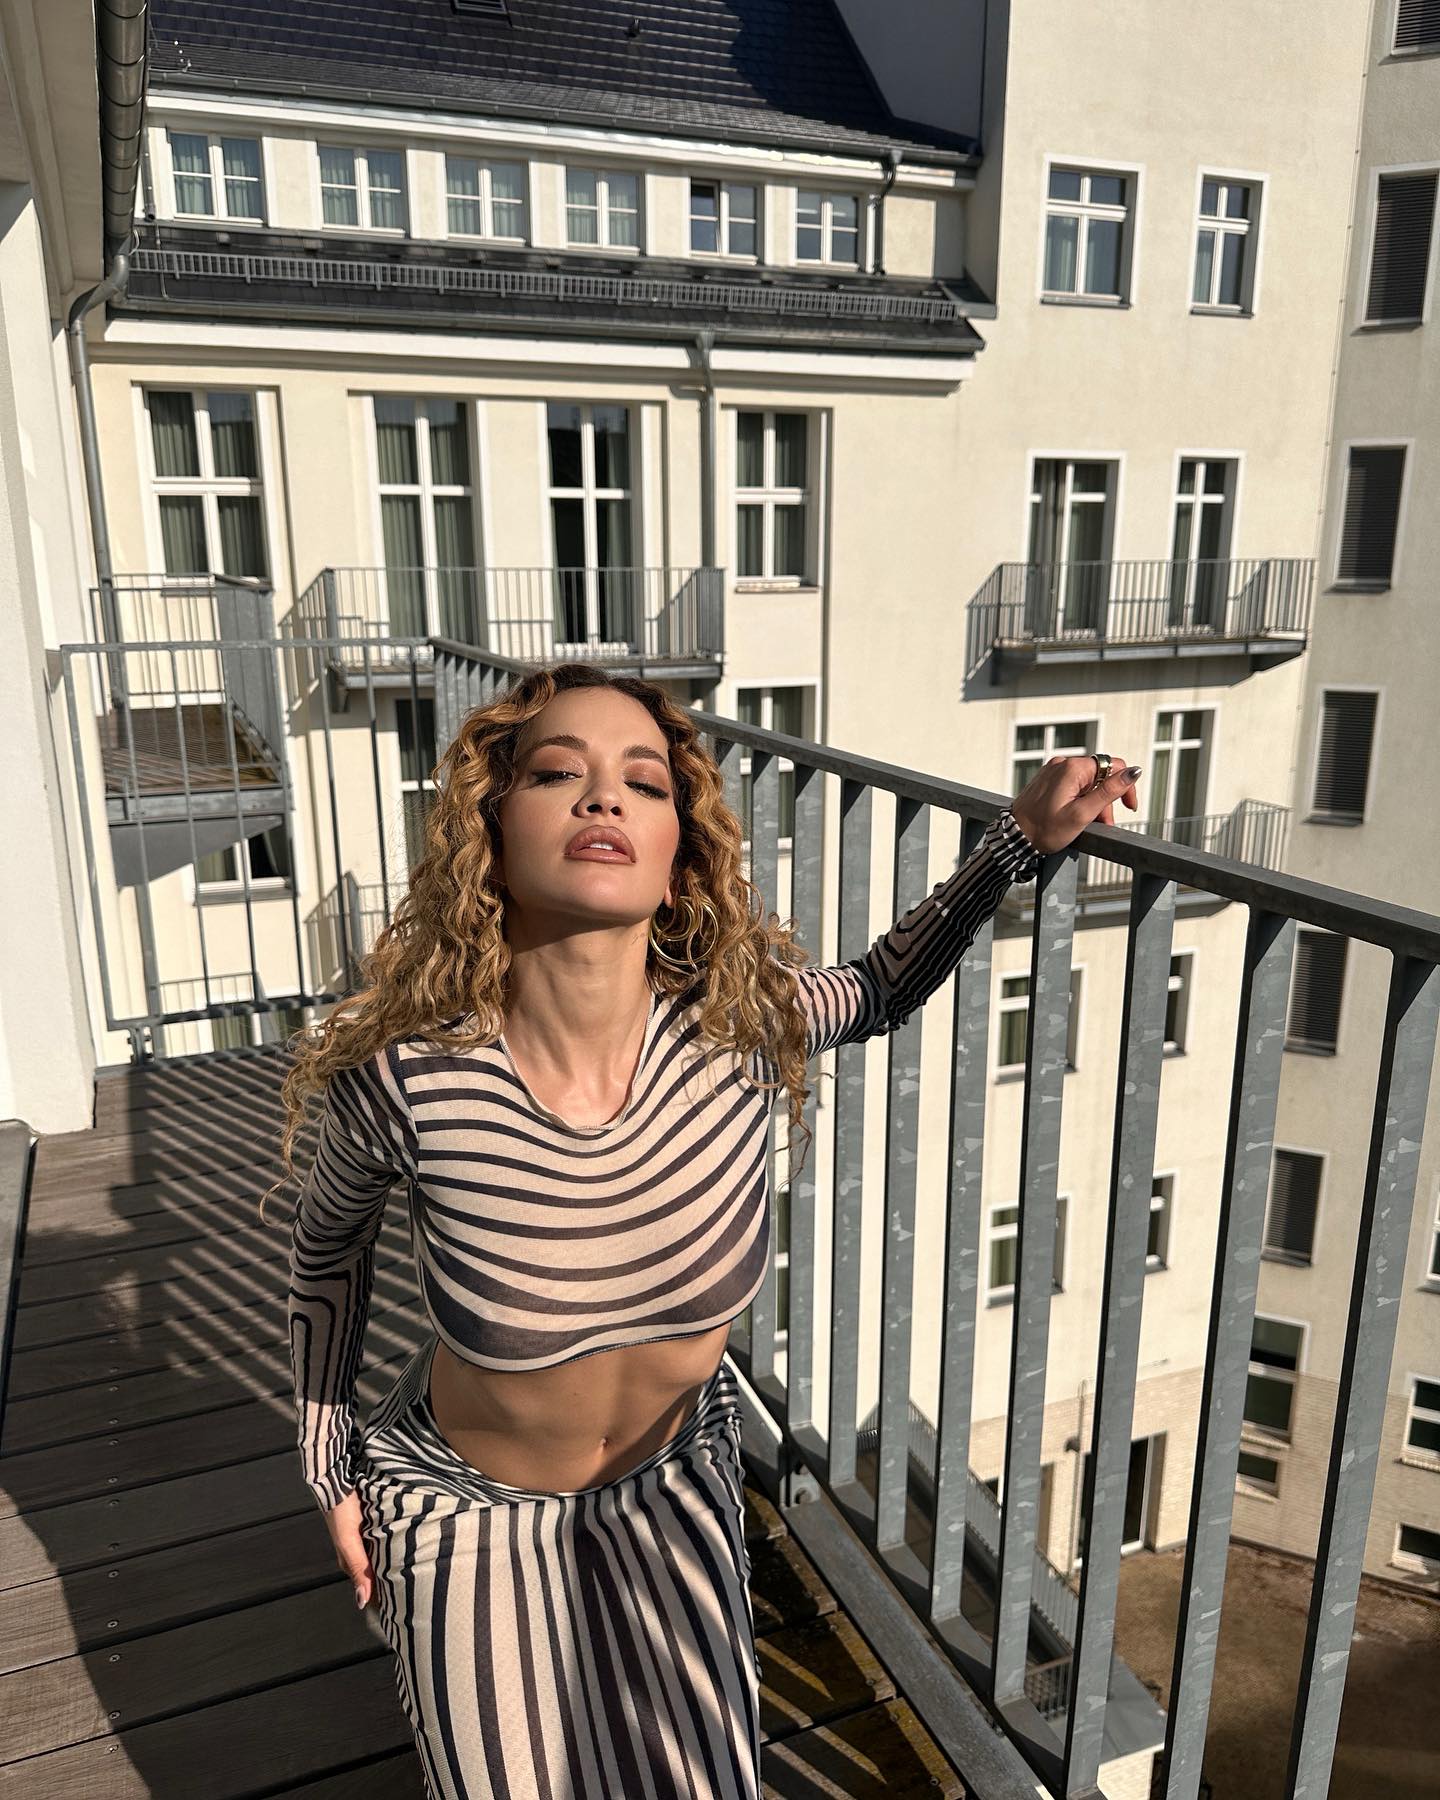 Rita Ora’s Balcony Display in Berlin!